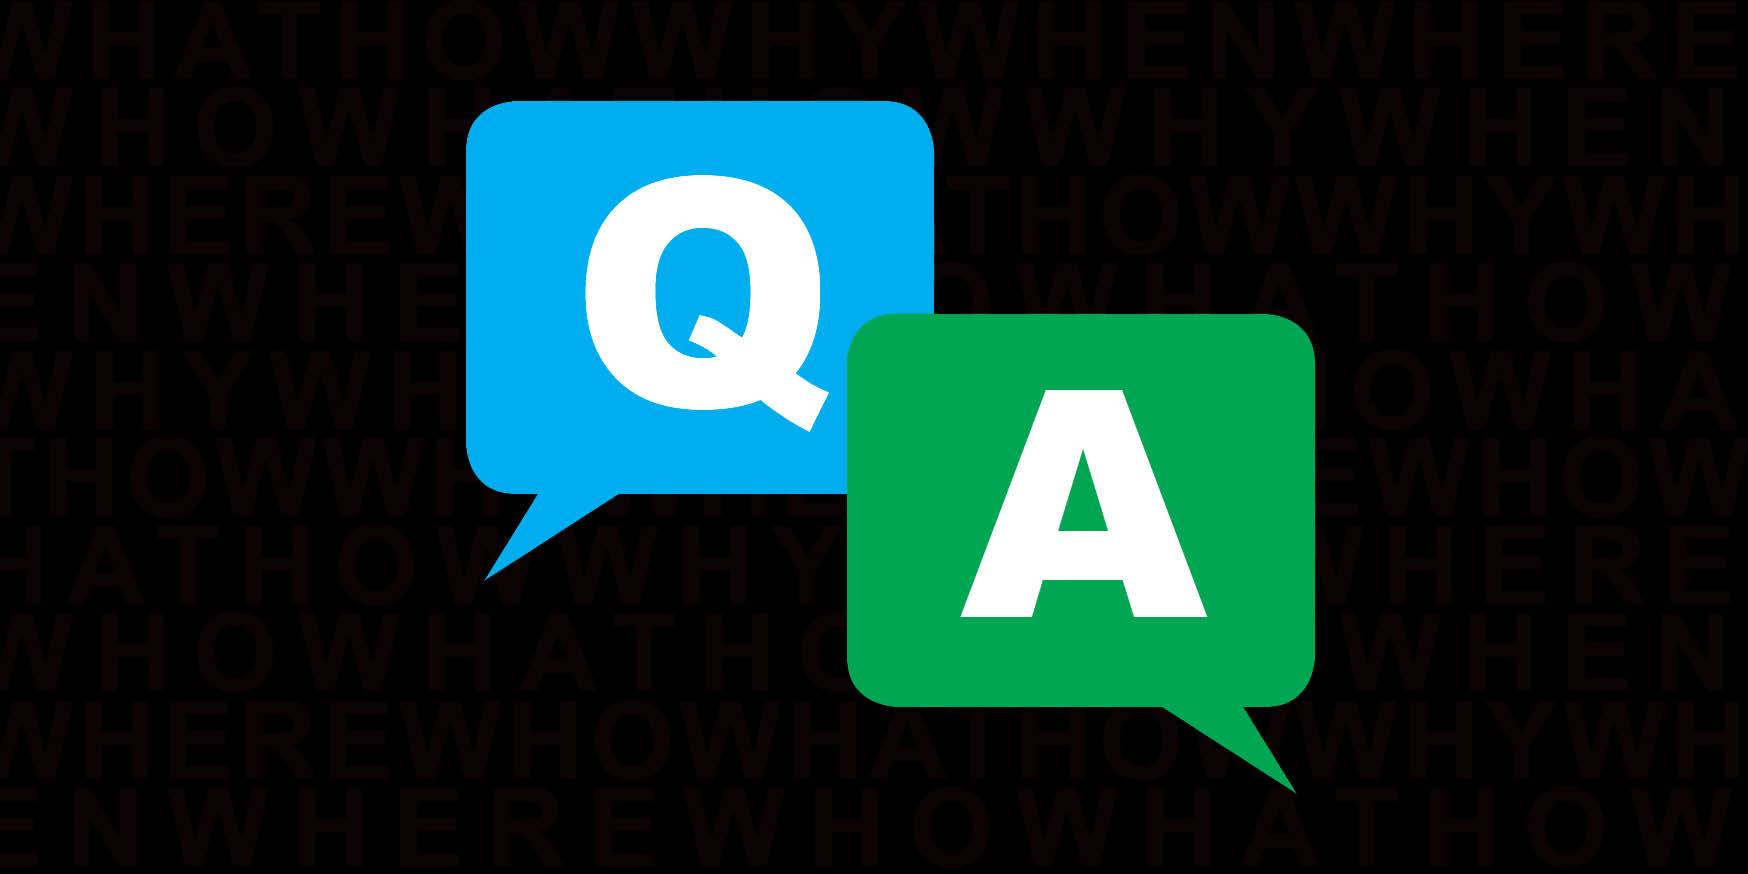 Q & A – 11:00 Service – 2018